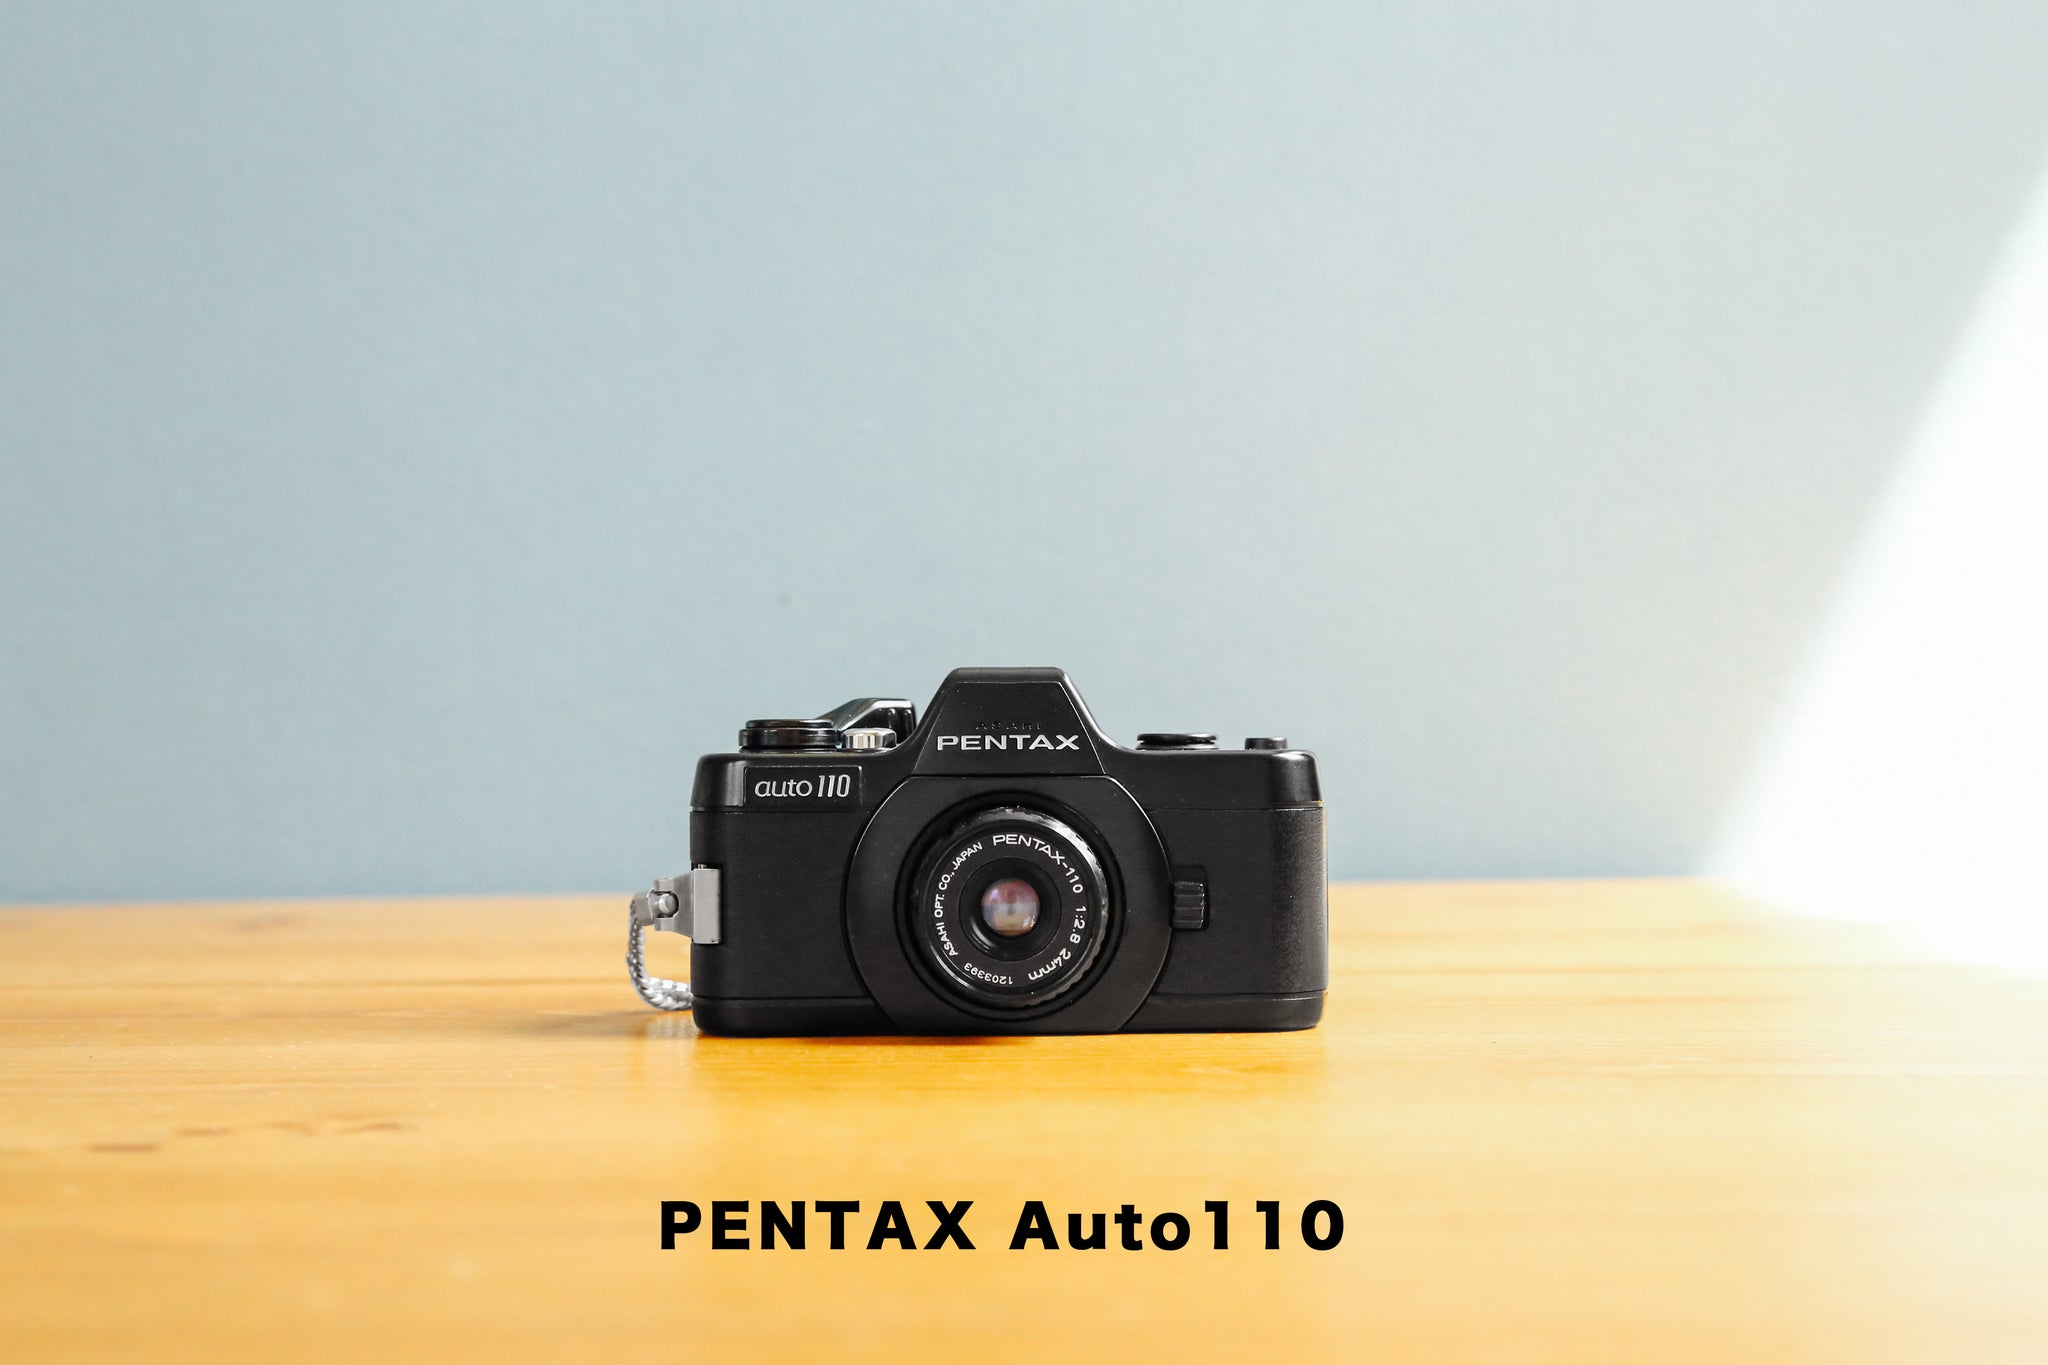 PENTAX Auto110 フルセット❗️【完動品】【実写済み❗️】110フィルム